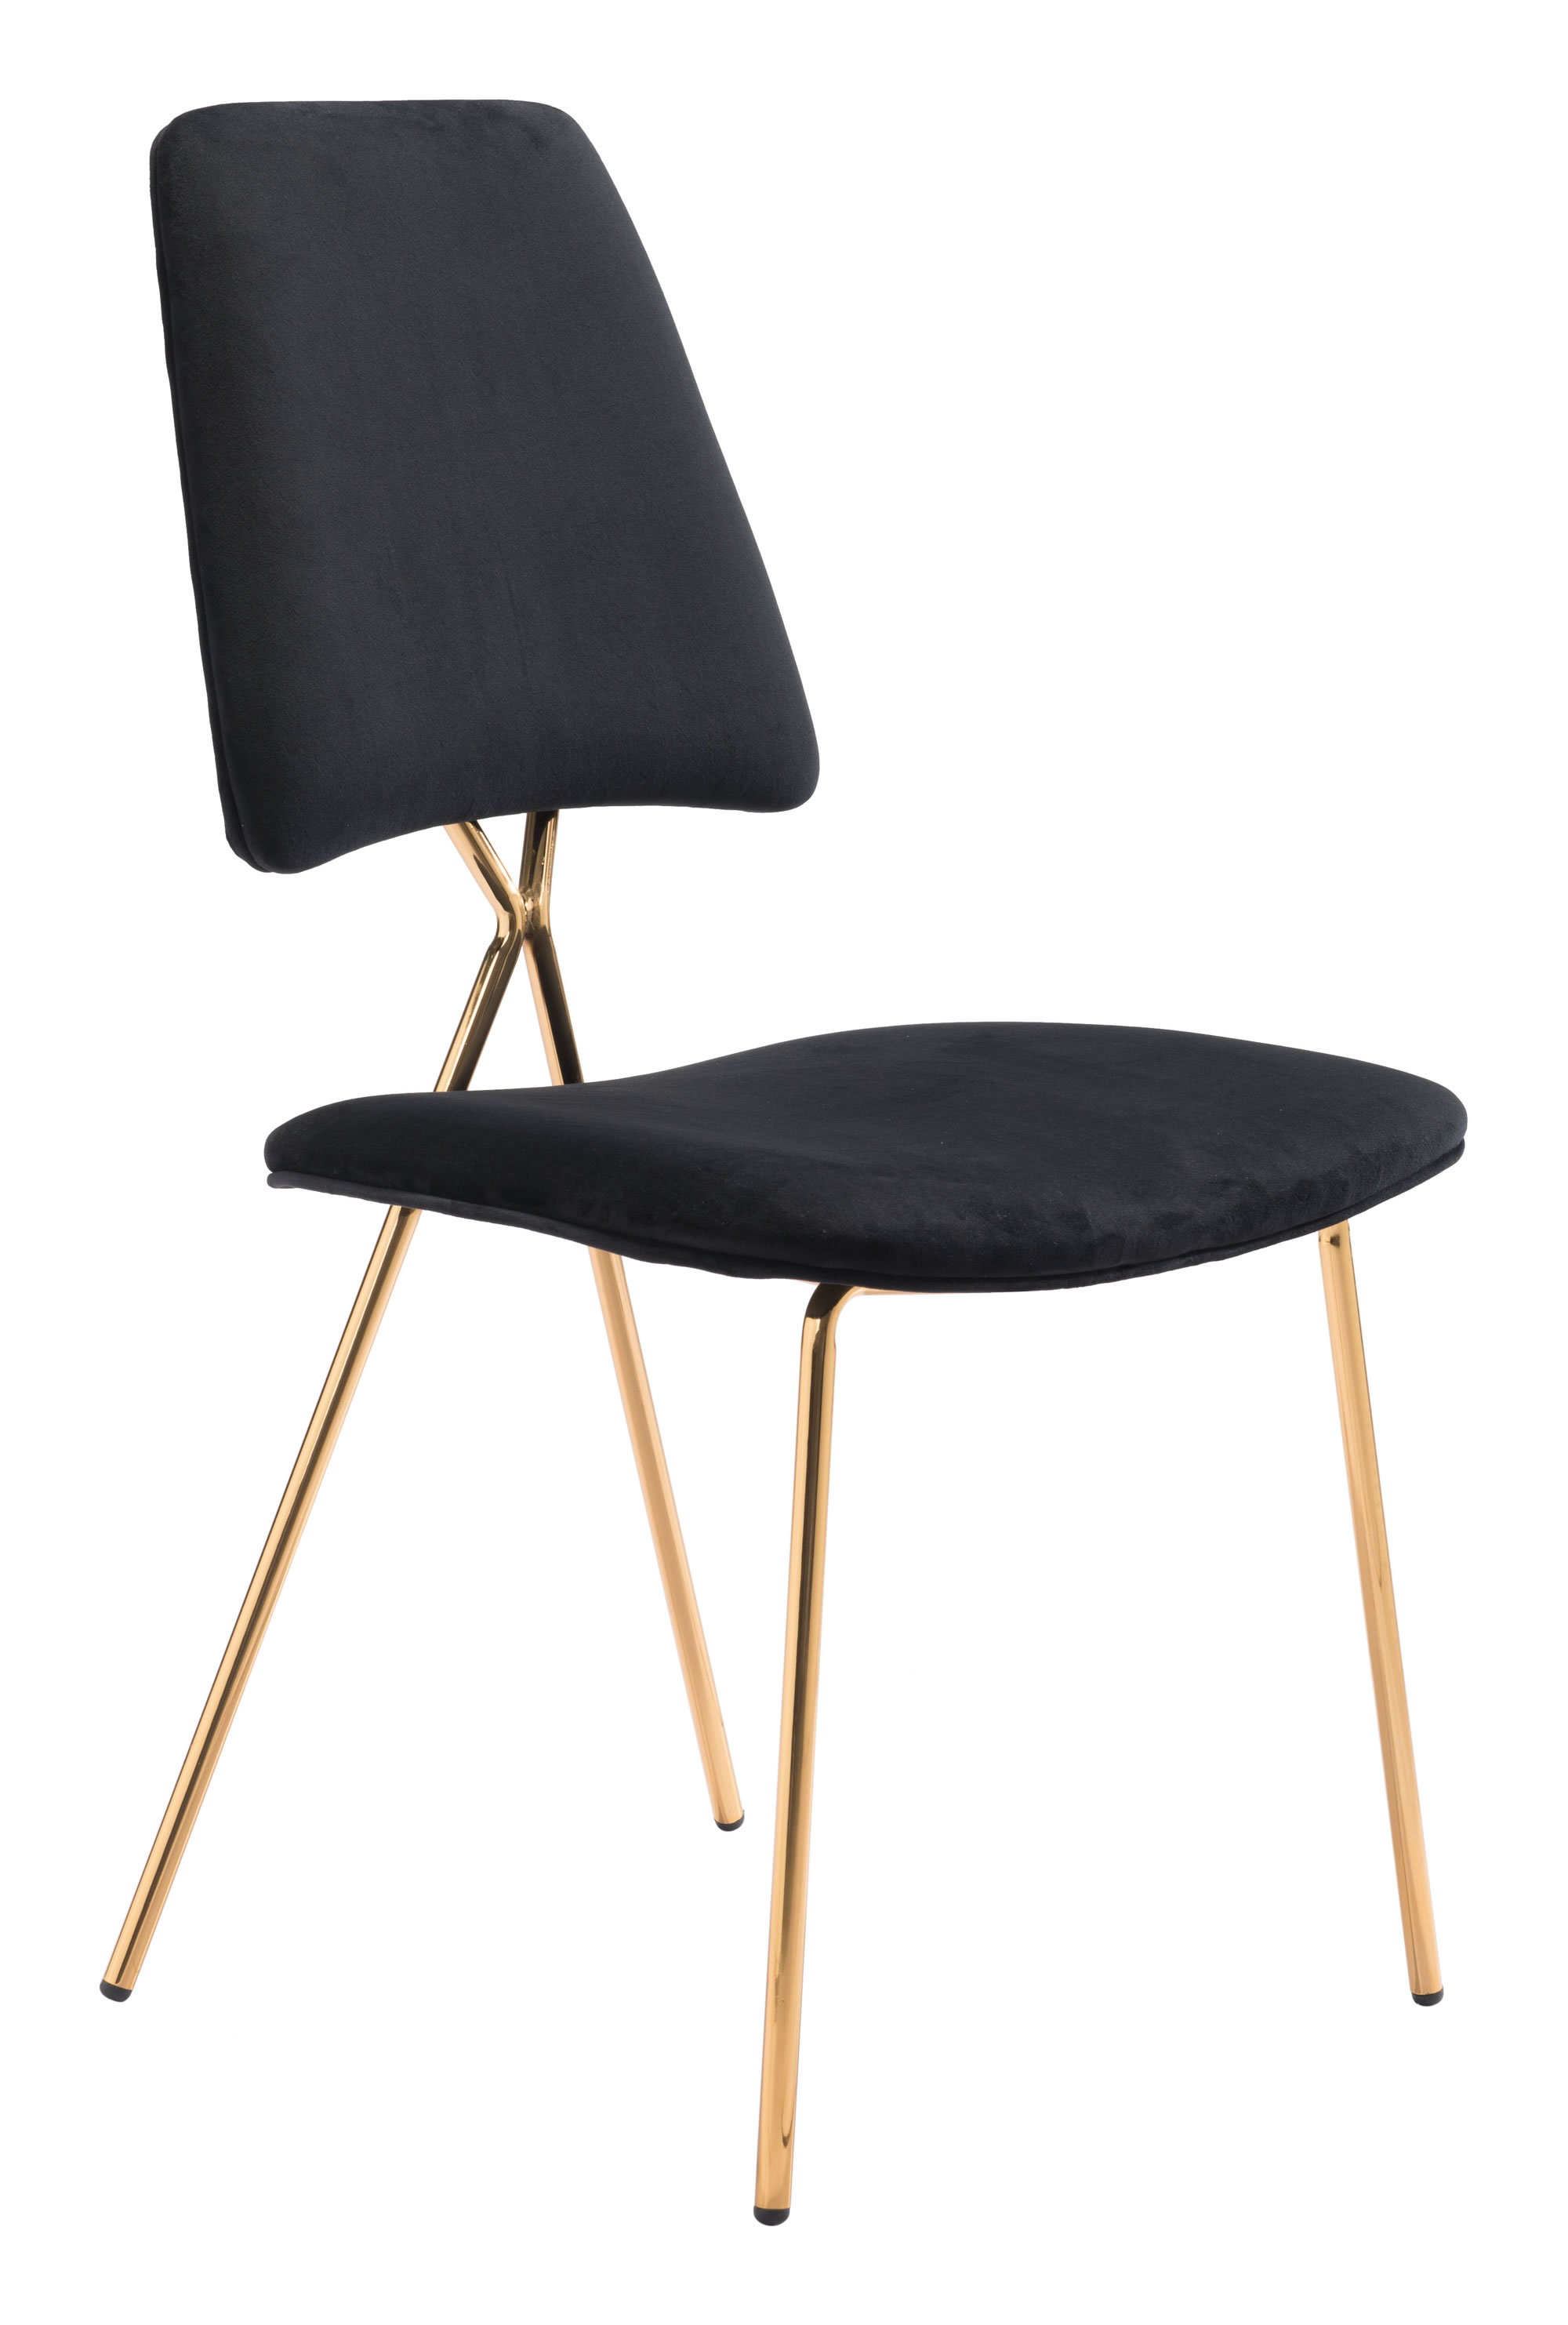 19.7" x 21.9" x 35.8" Black & Gold, Velvet, Steel & Plywood, Chair - Set of 2